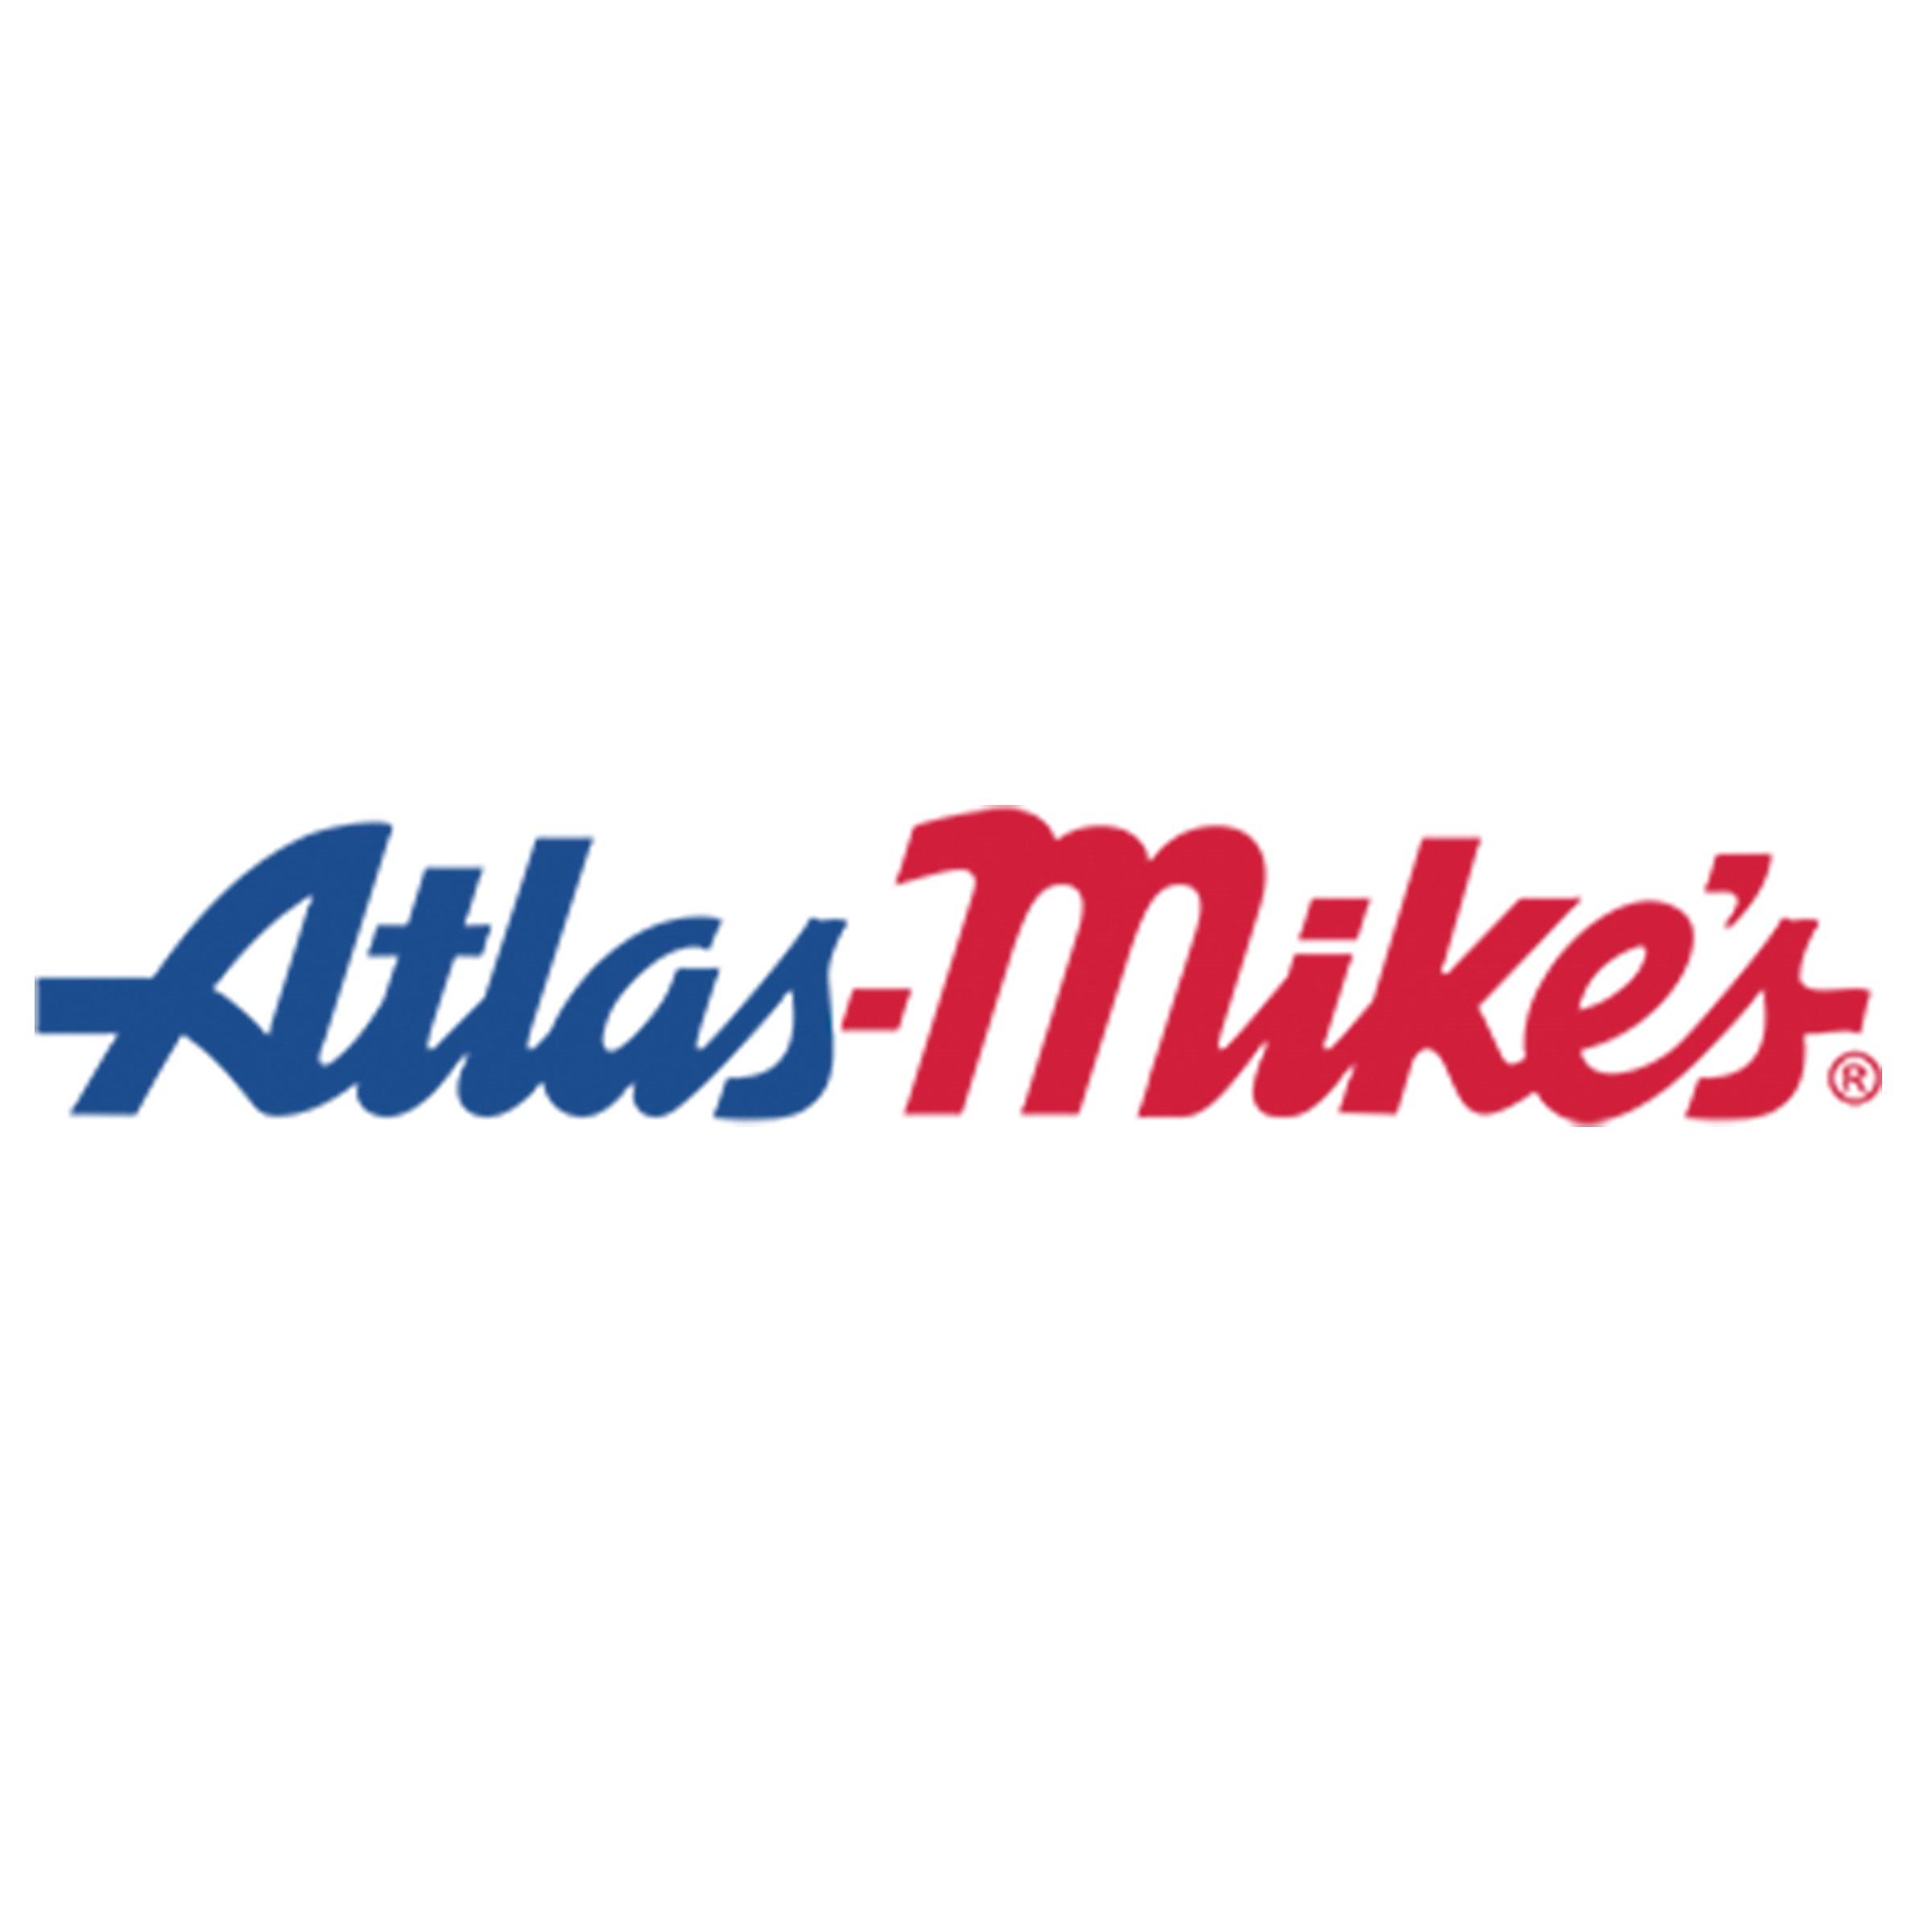 911-Atlas Mikes